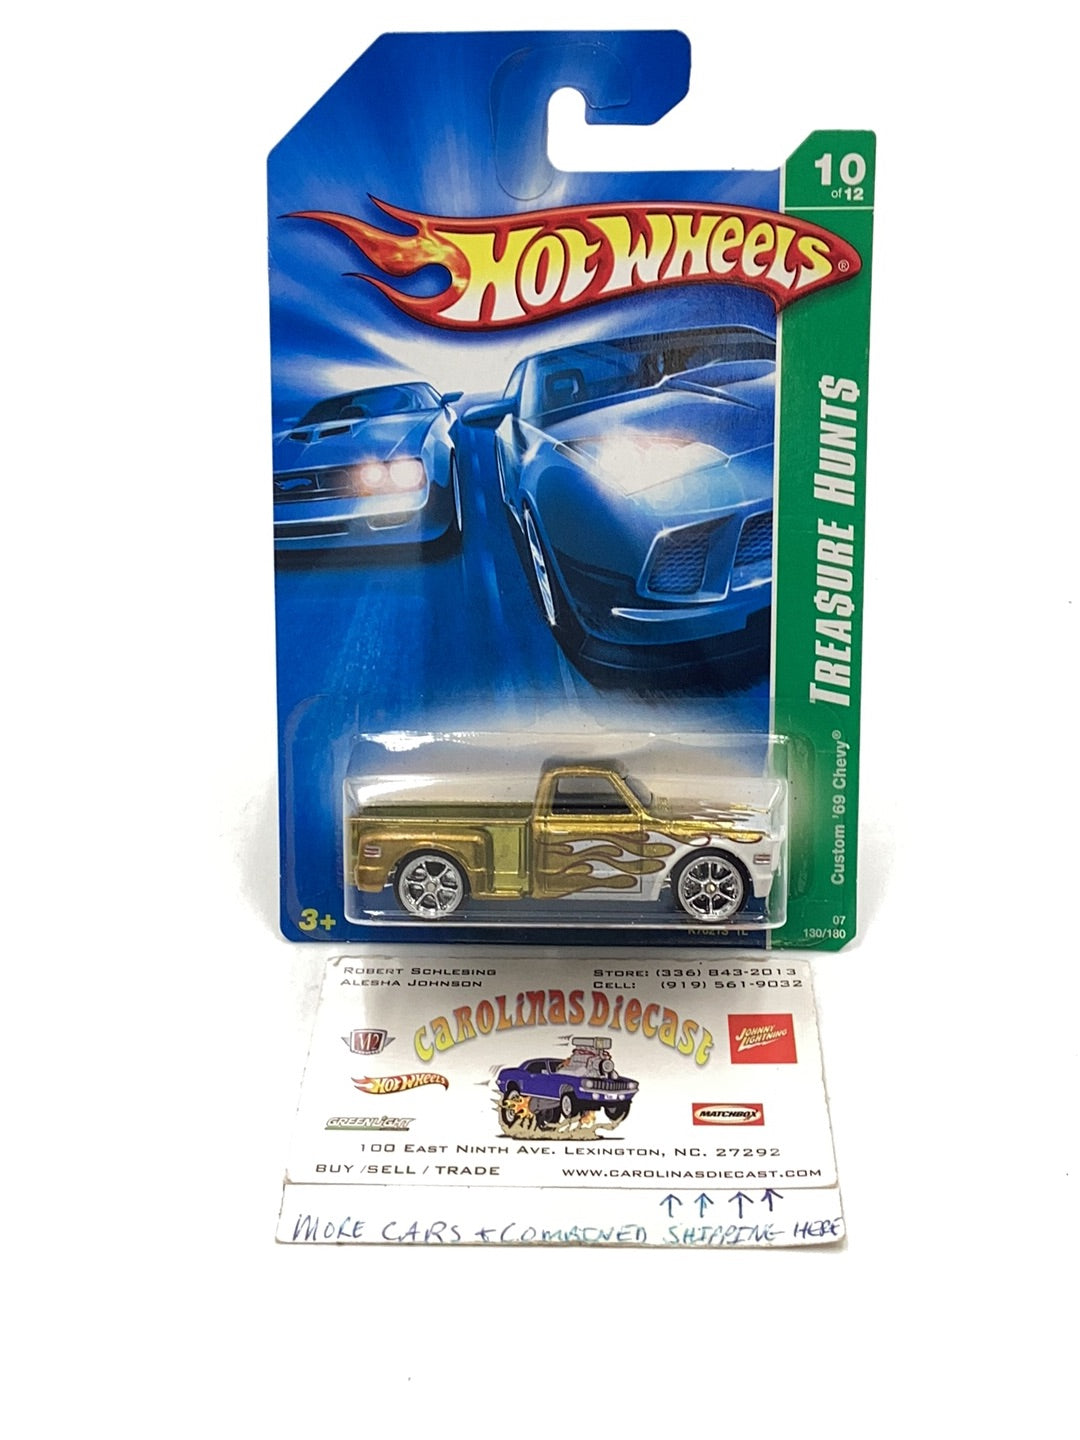 2007 Hot Wheels Treasure Hunt #130 Custom 69 Chevy with protector